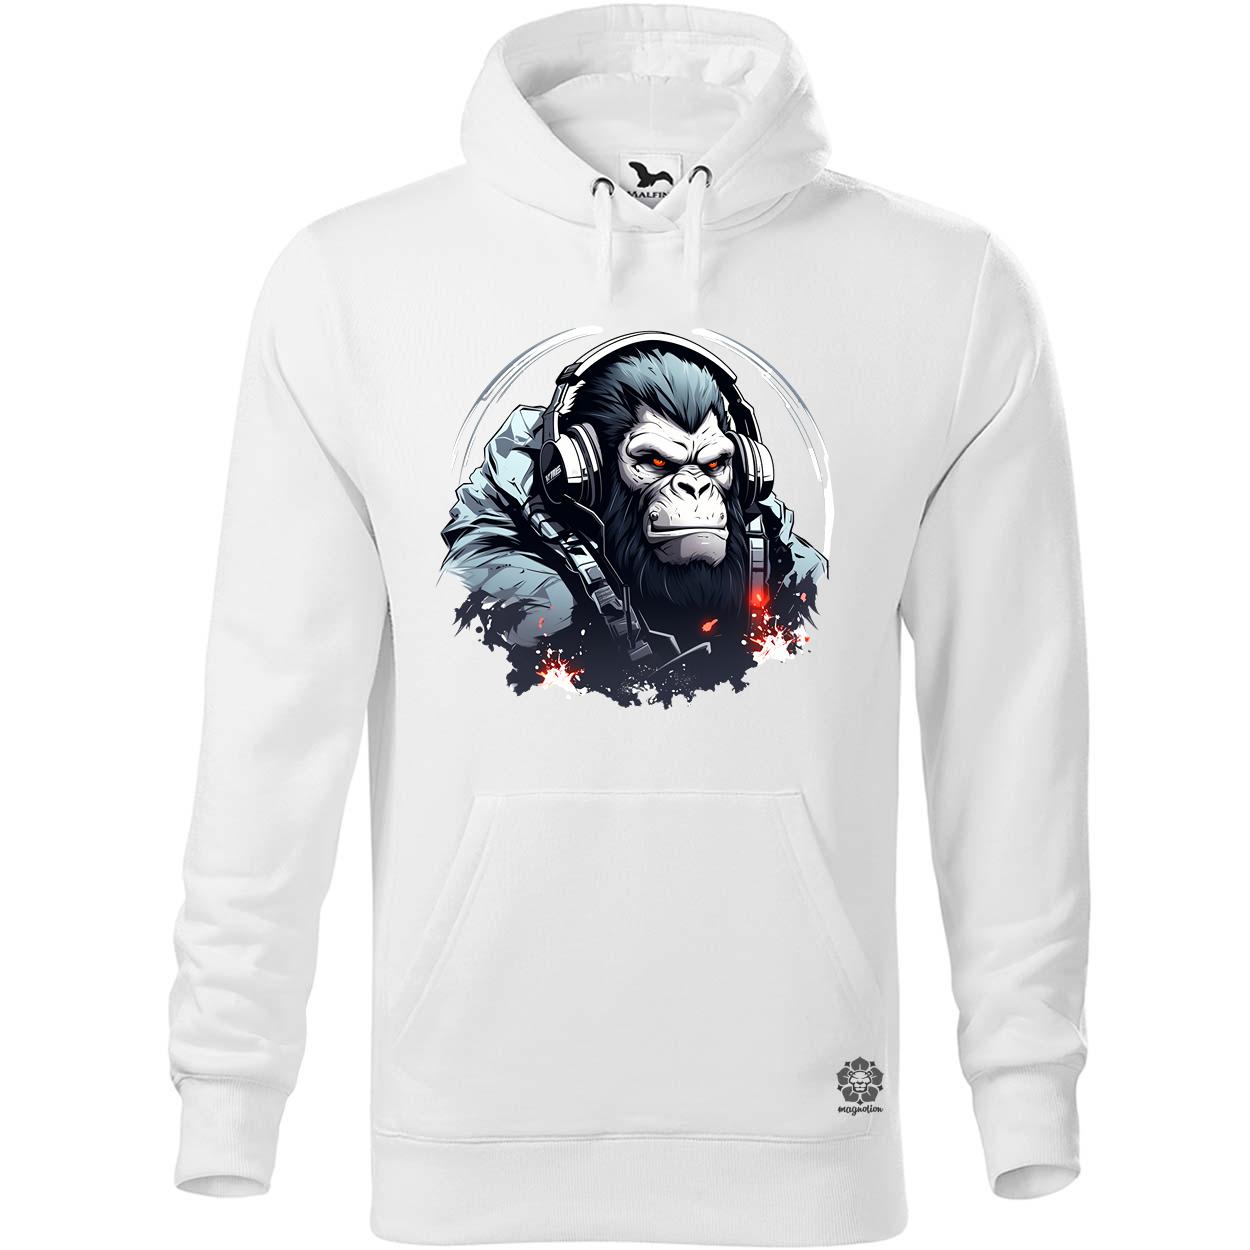 Cyberpunk gorilla v2